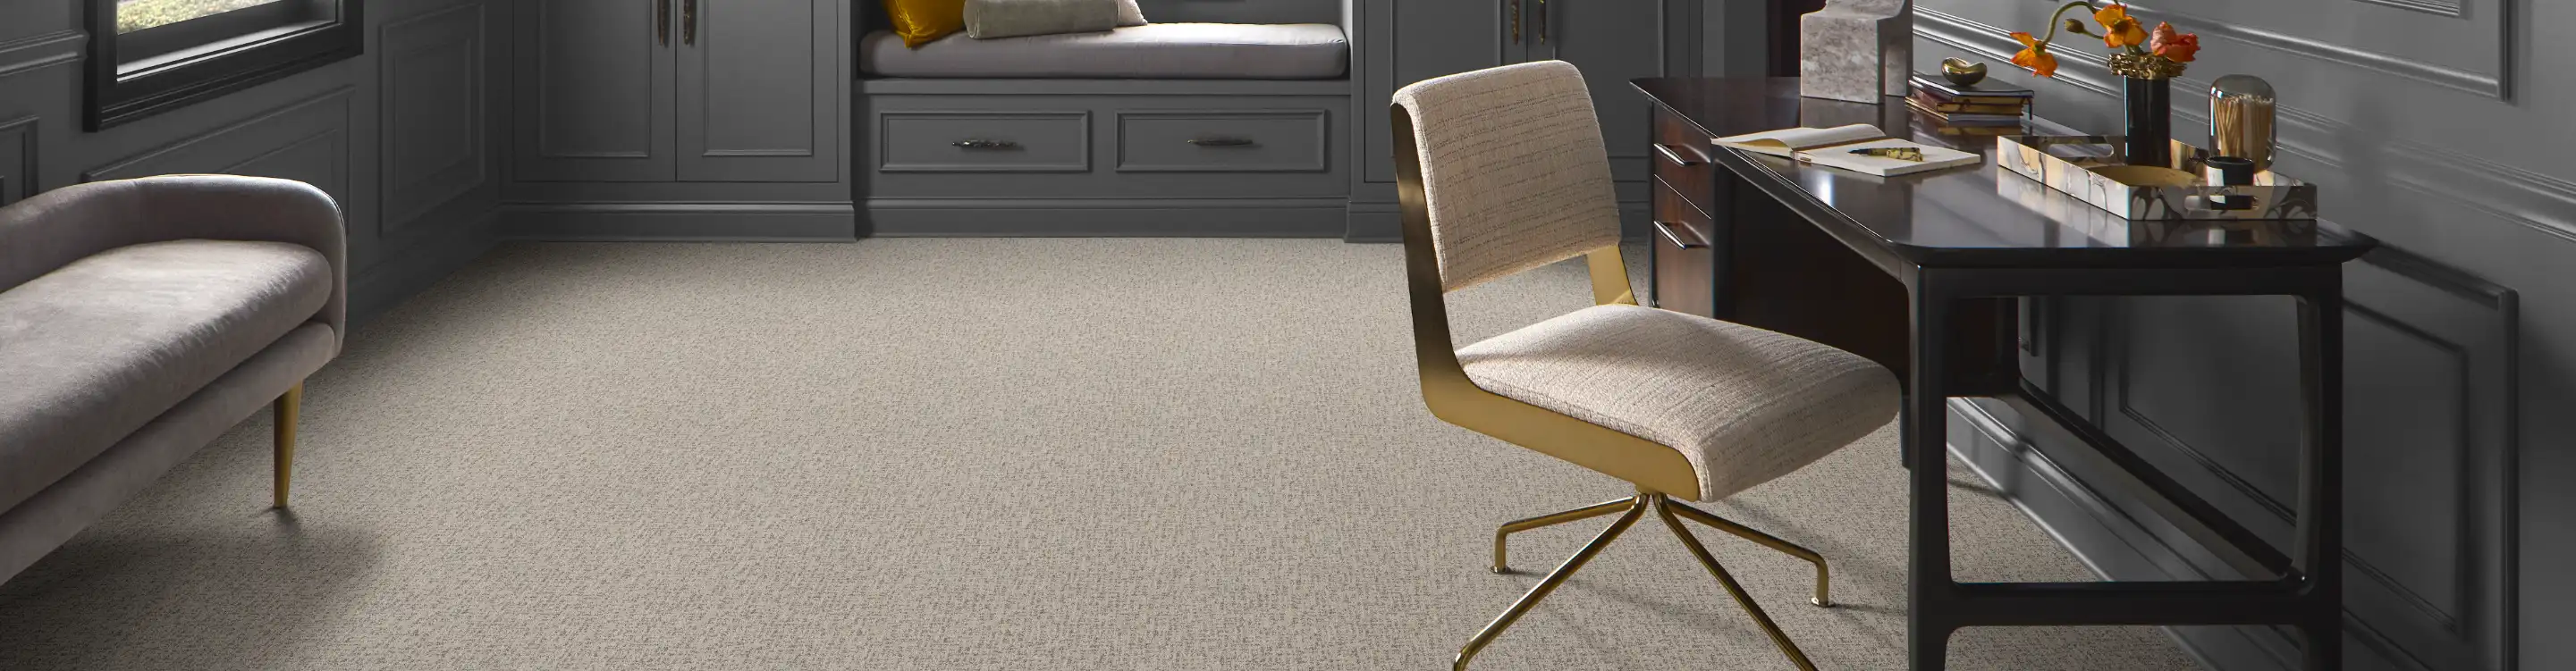 Choosing The Best Carpet Underlay